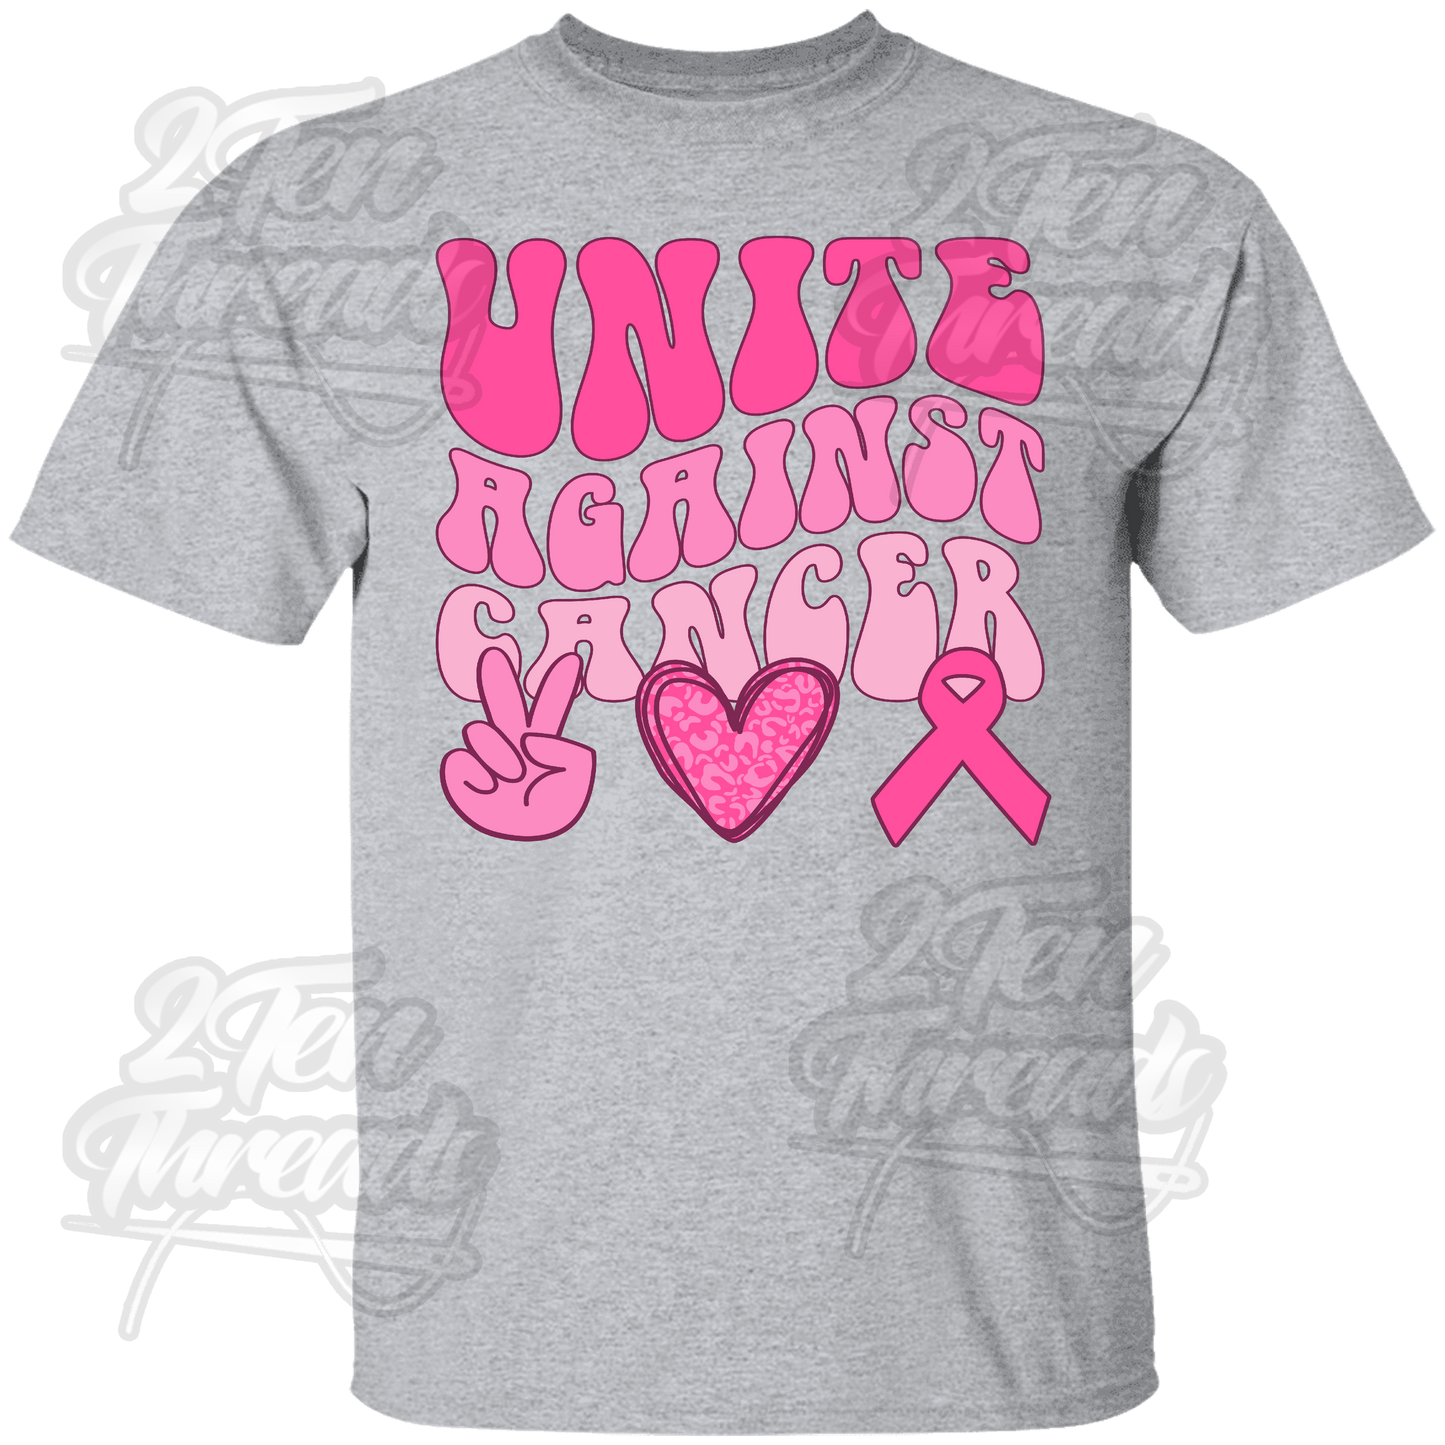 Unite Against Cancer Shirt